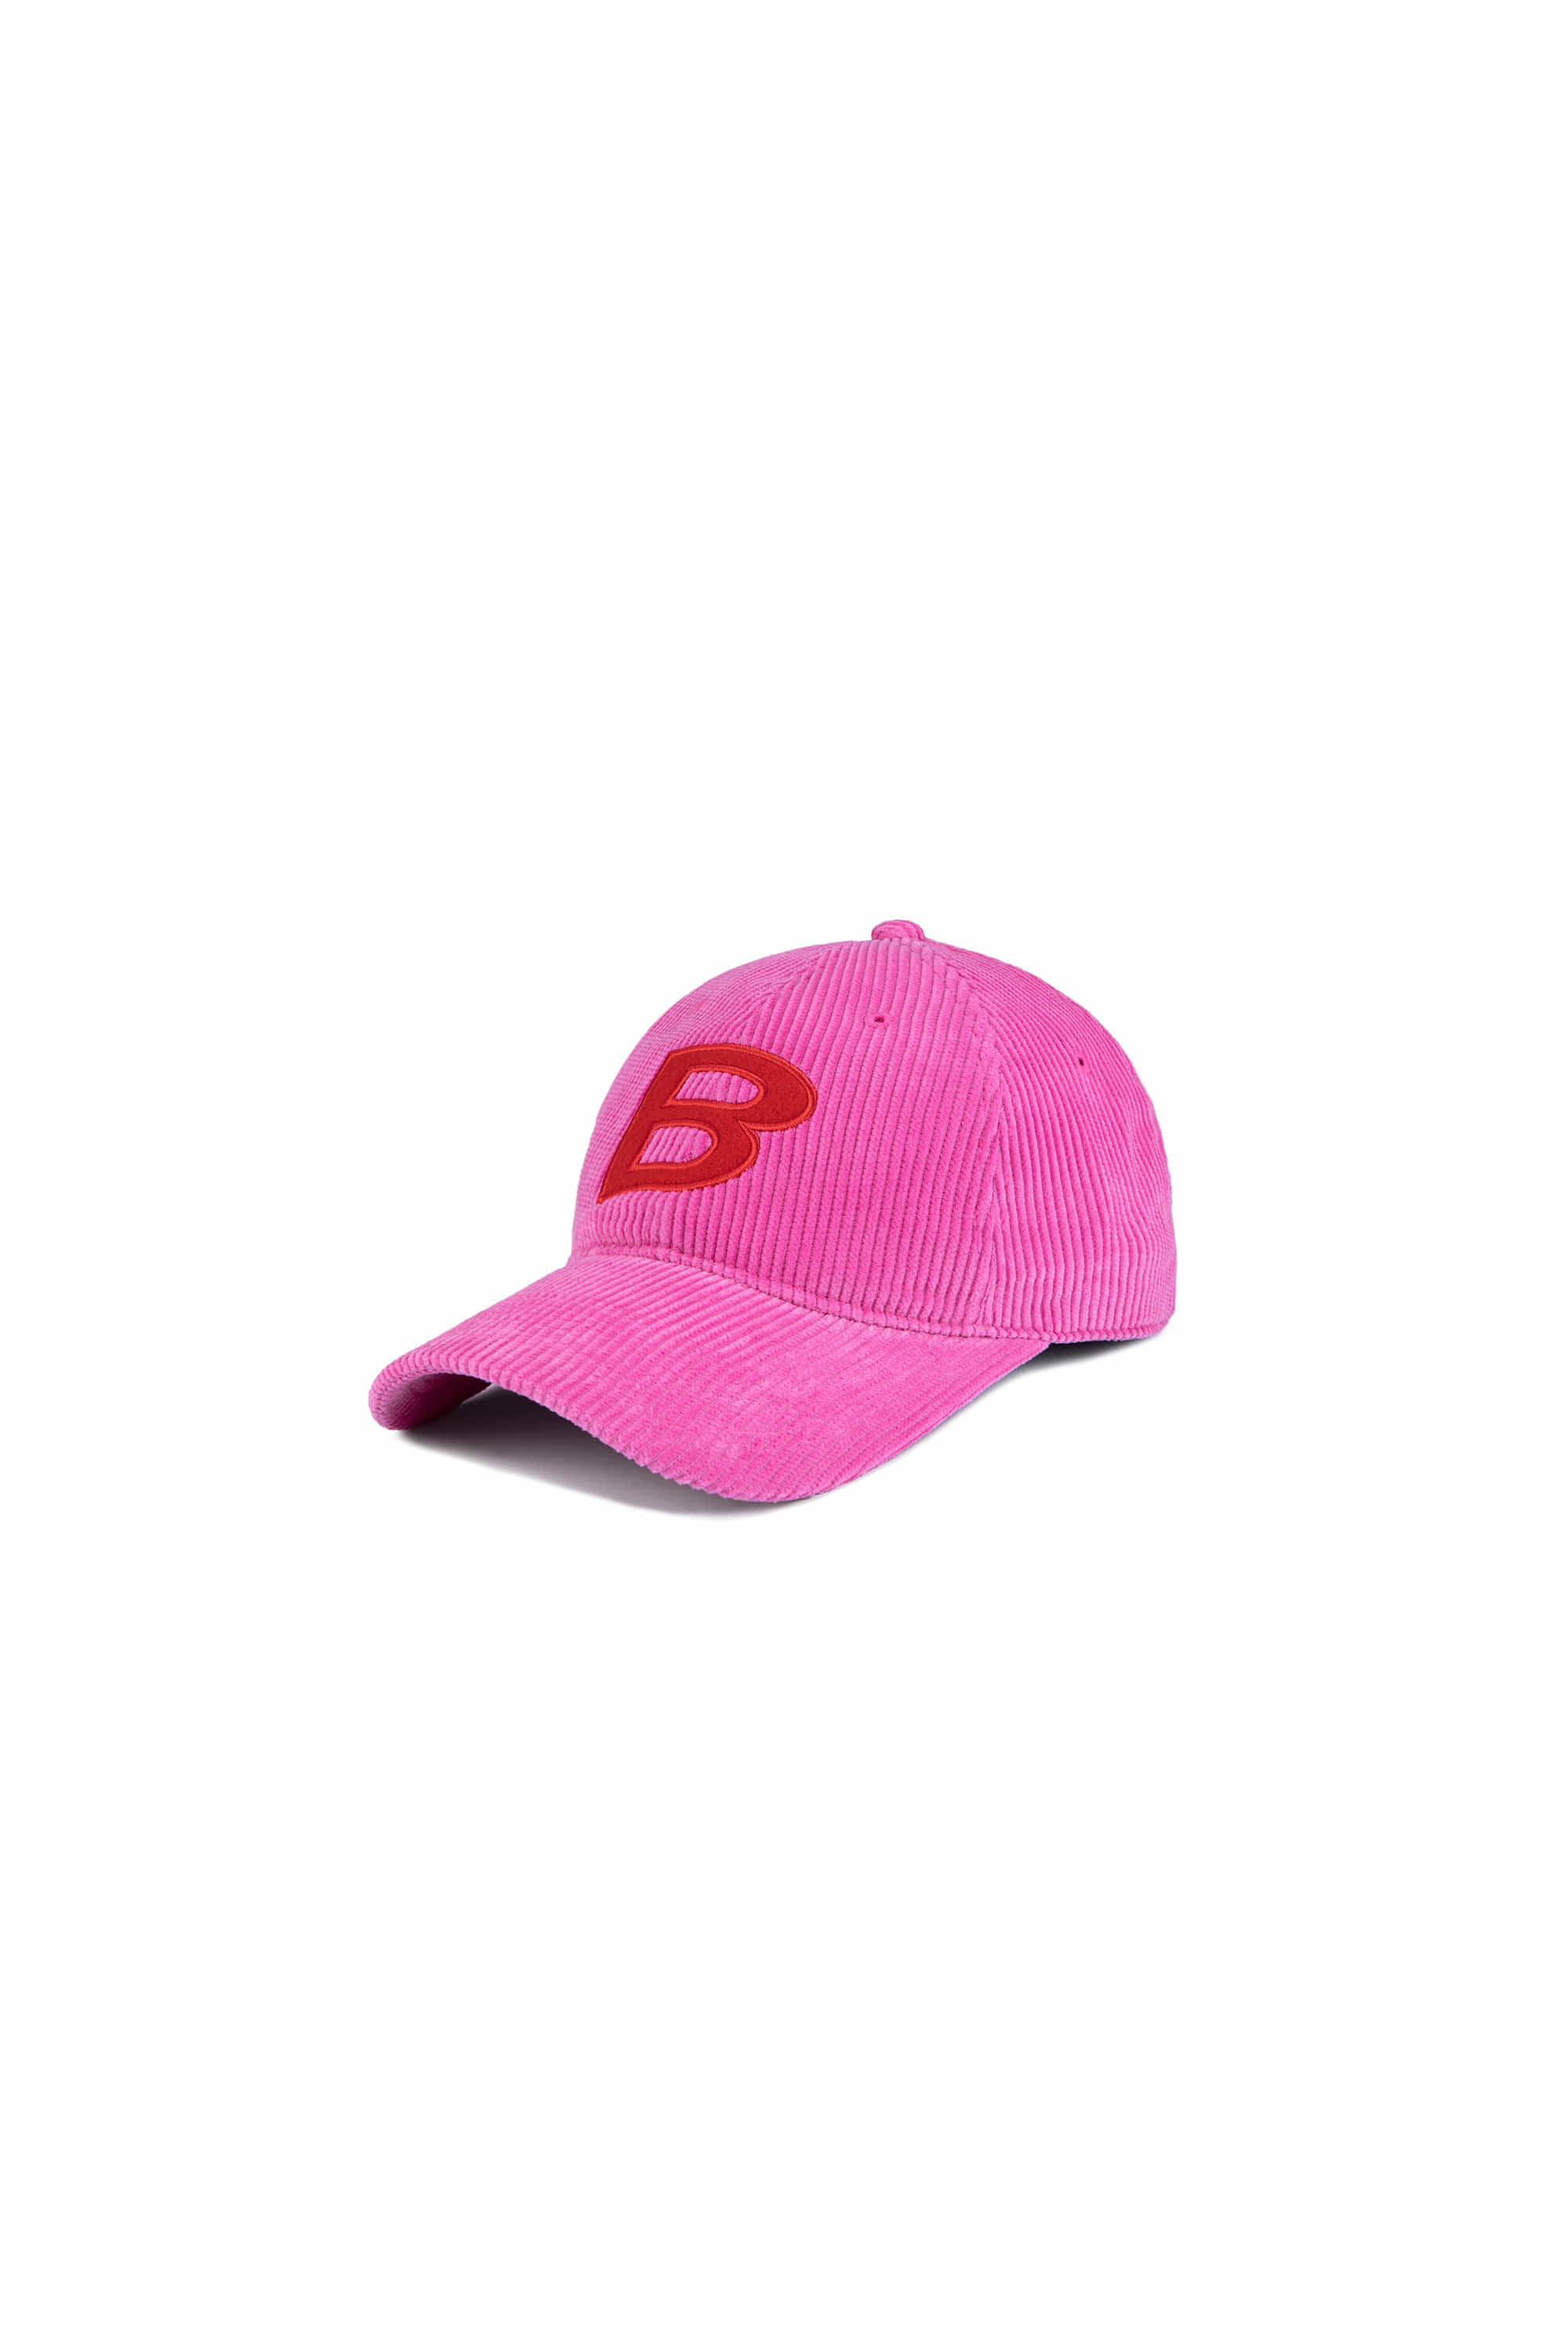 B PATCH CORDUROY CAP - PINK